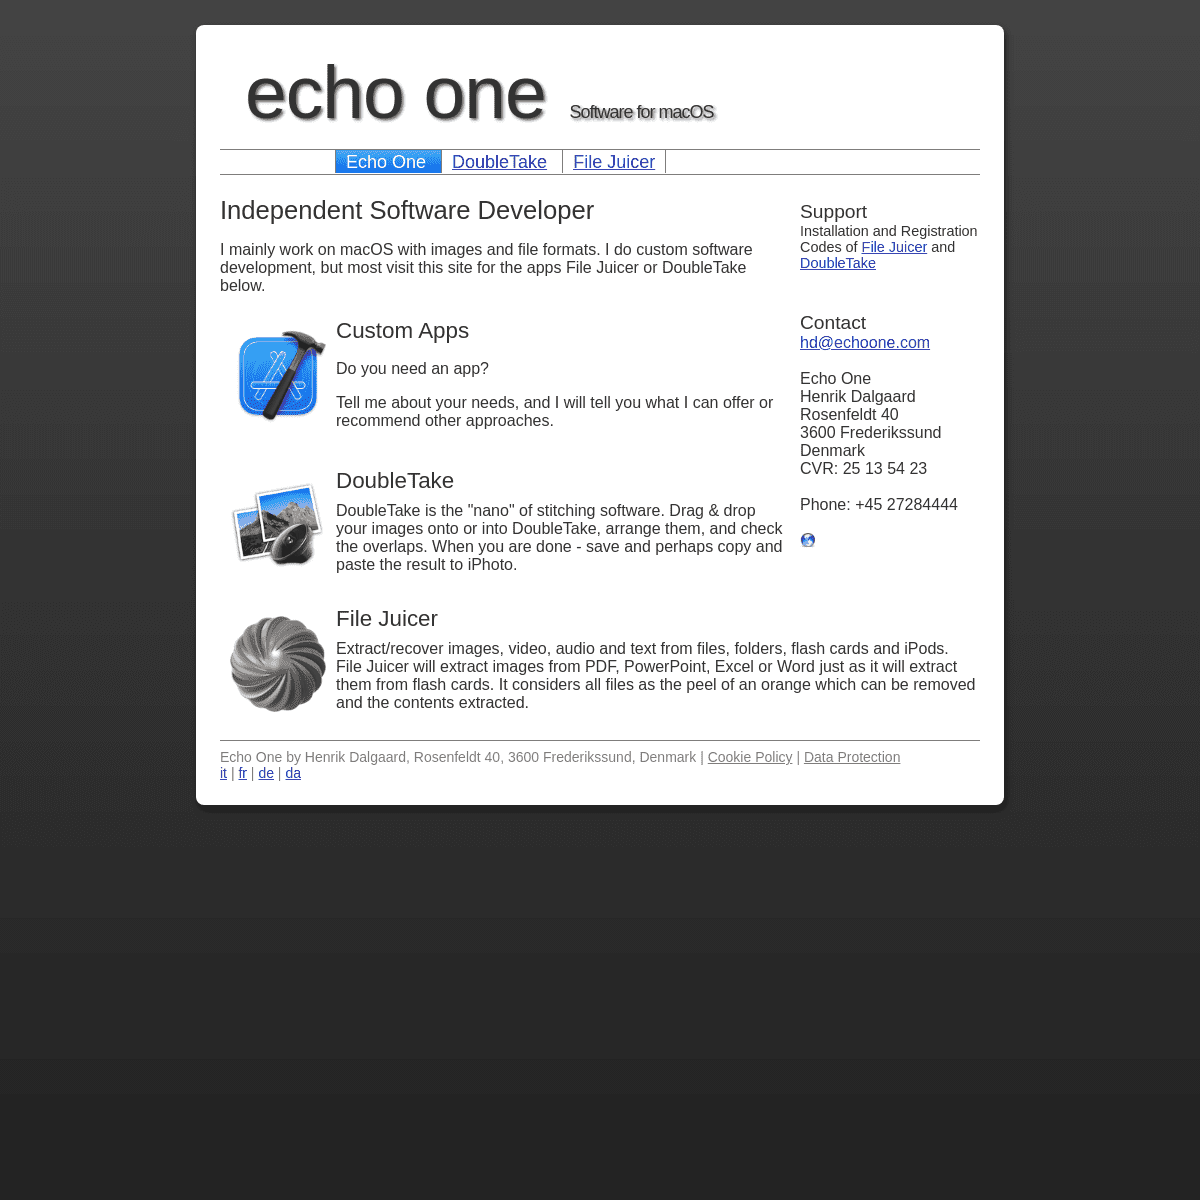 A complete backup of https://echoone.com